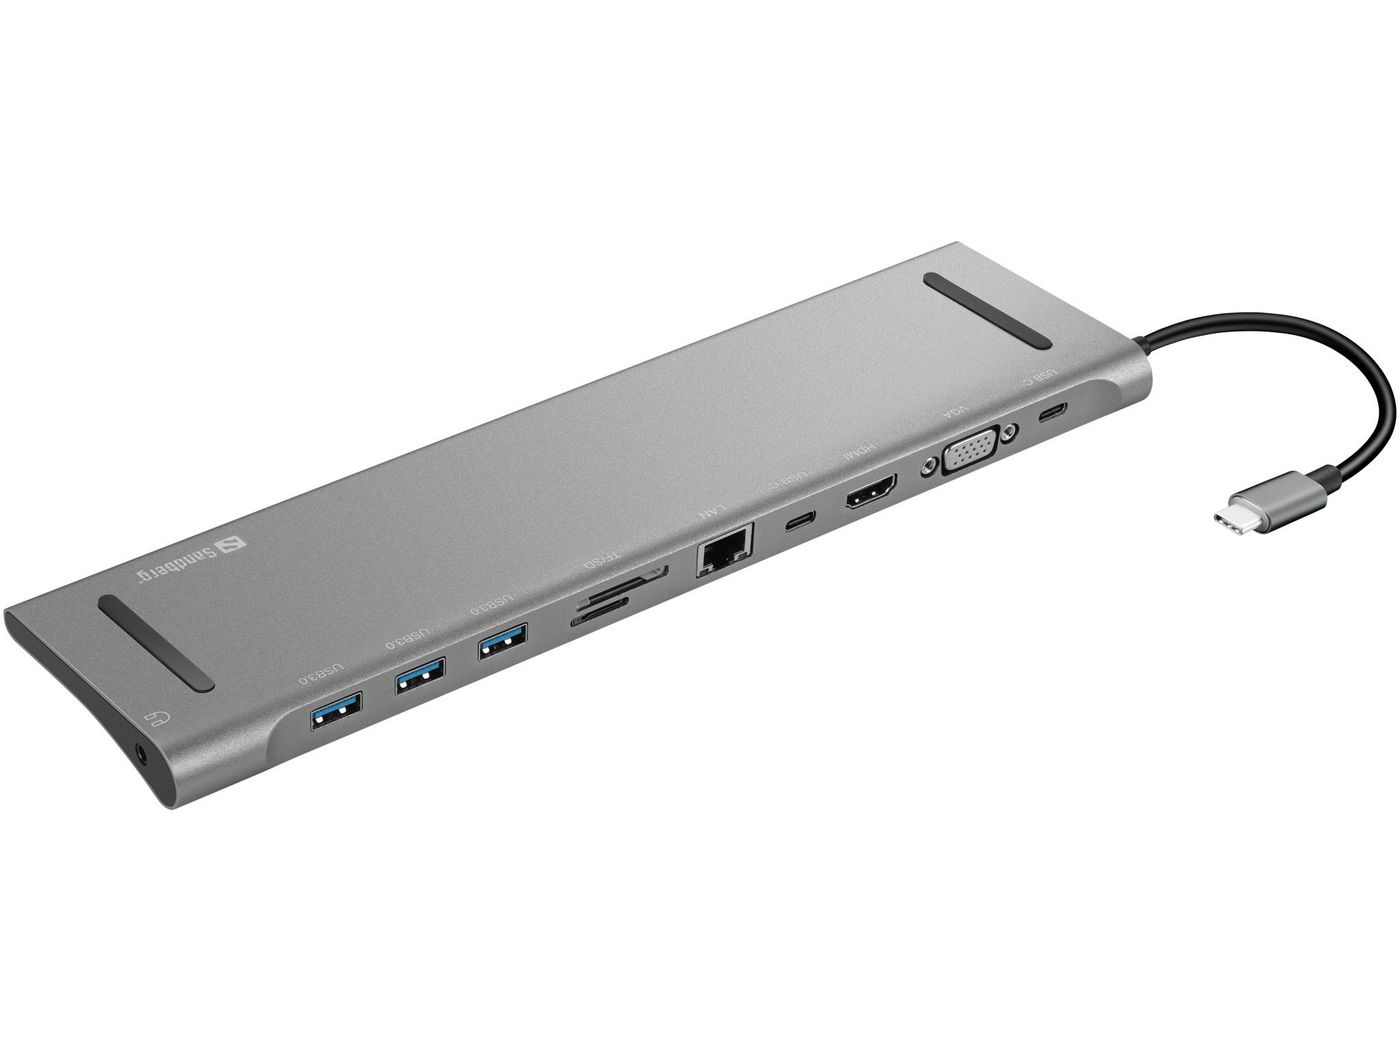 USB-C 10-in-1 Docking Station - USB-C PD / USB-C / HDMI / VGA / 3x USB 3.0 A / RJ45 / Audio - 100w USB Power Delivery